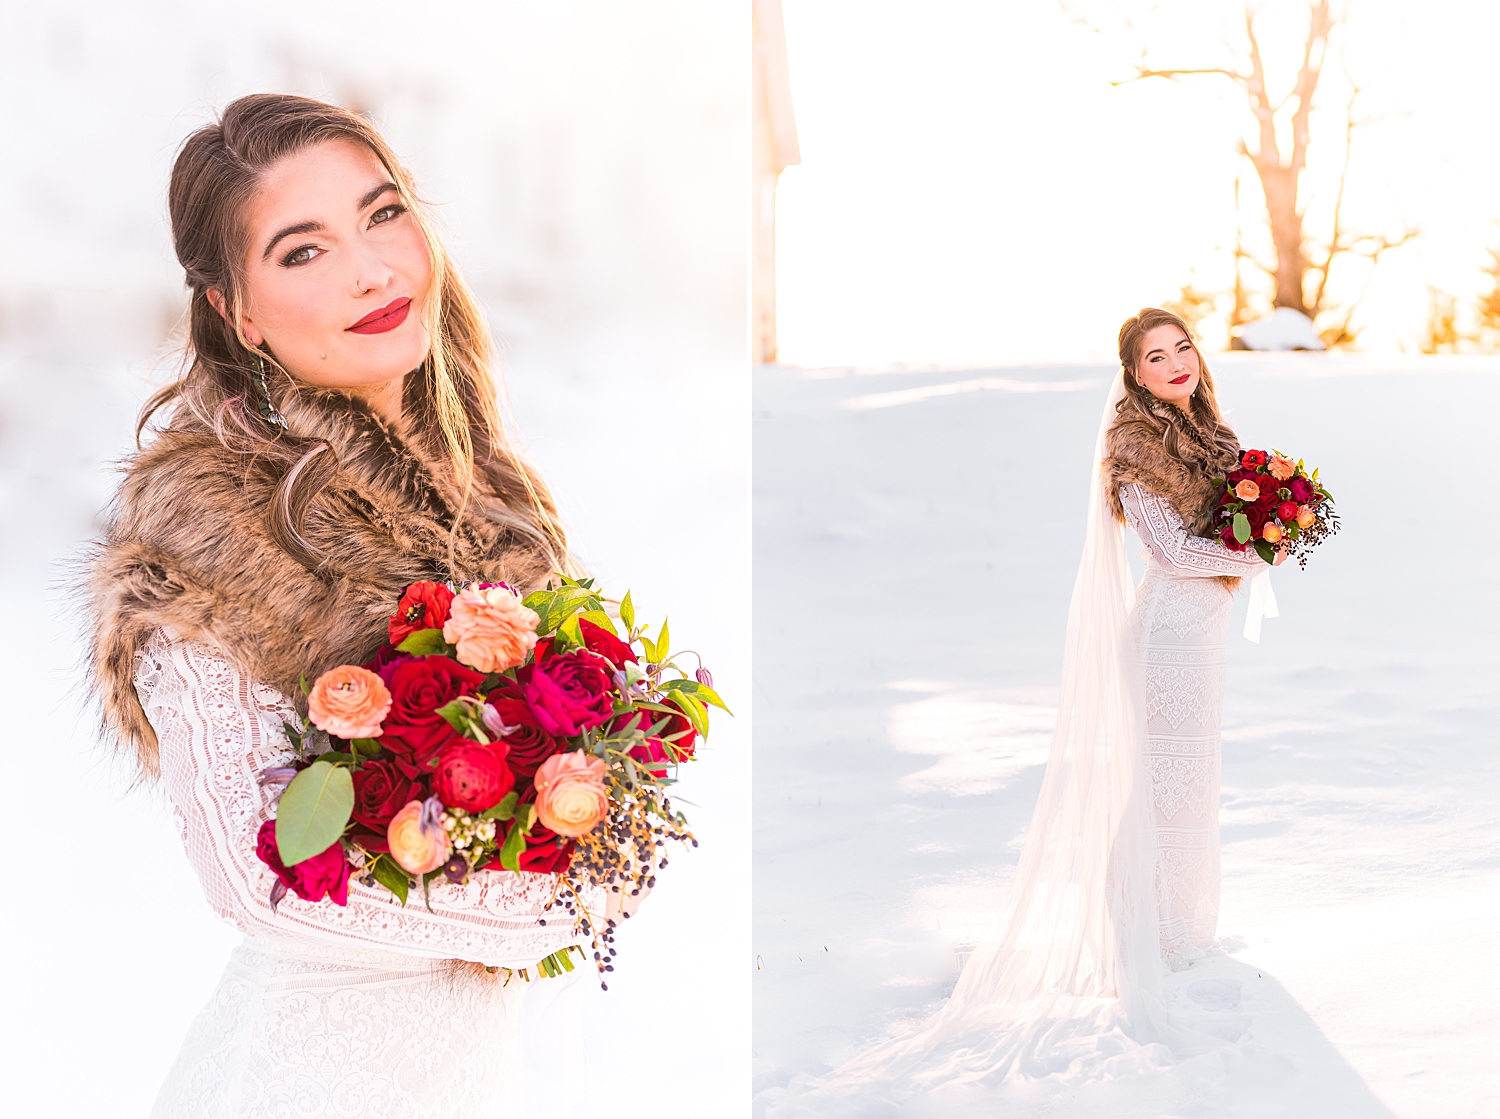 bride walks across the fallen snow during winter wedding styled shoot